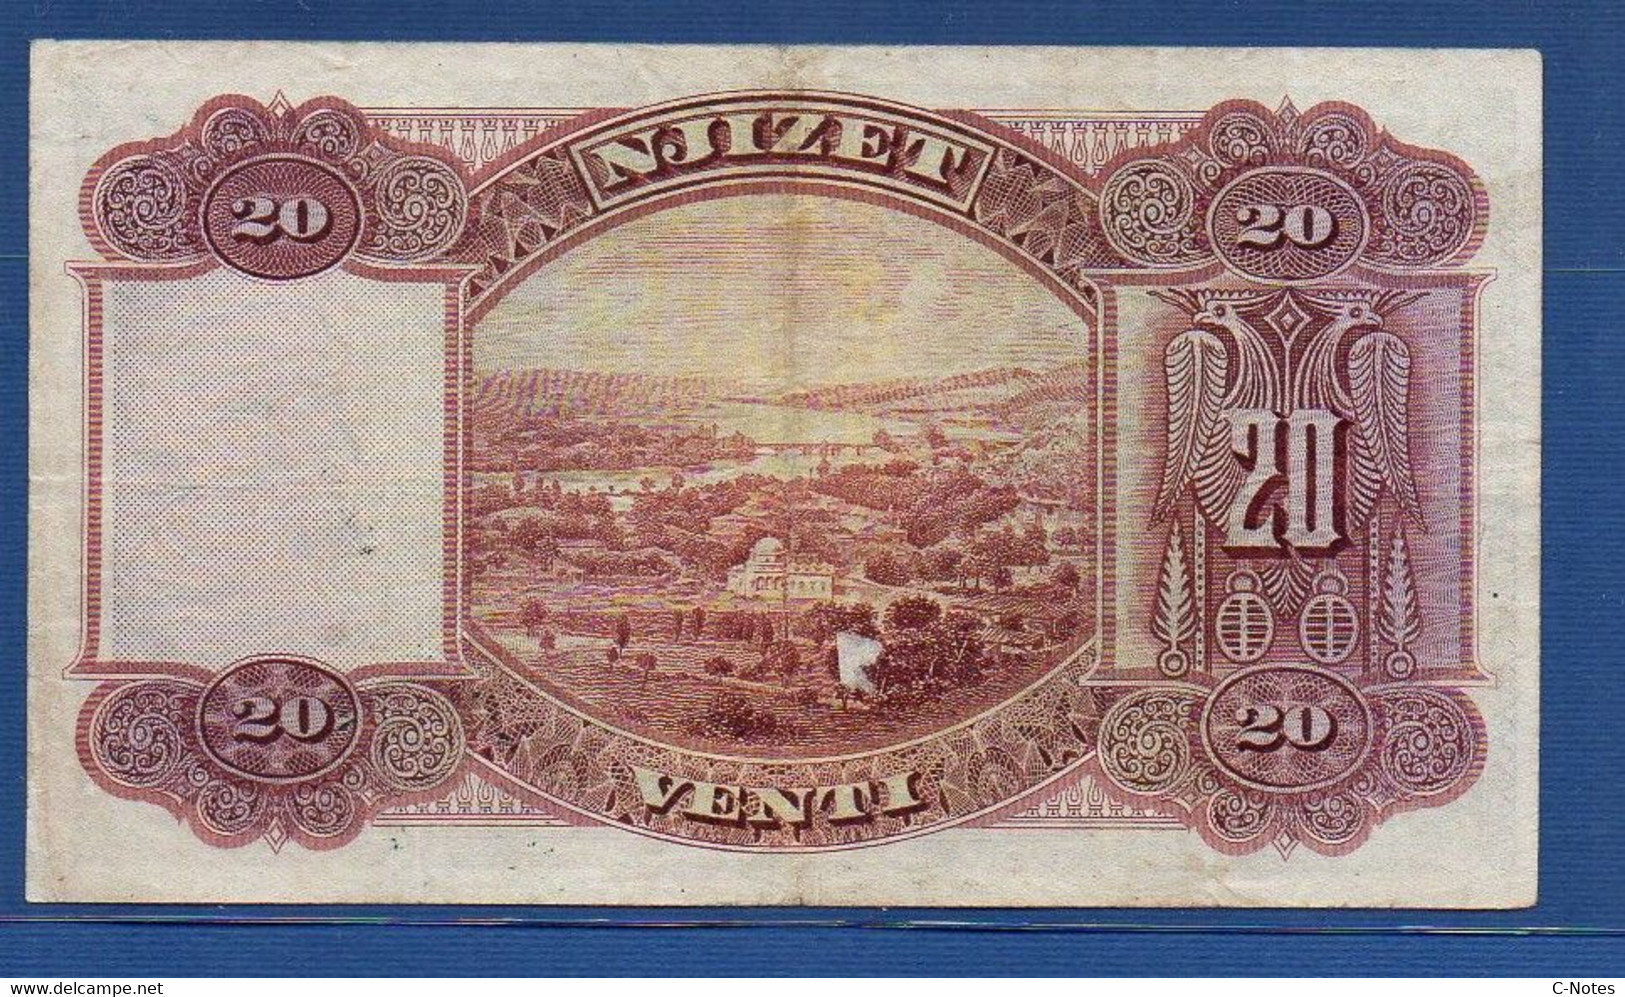 ALBANIA - Banca Nazionale D'Albania - P. 3 – 20 Franka 1926 -  AVF, Serie H36,088 - Albania